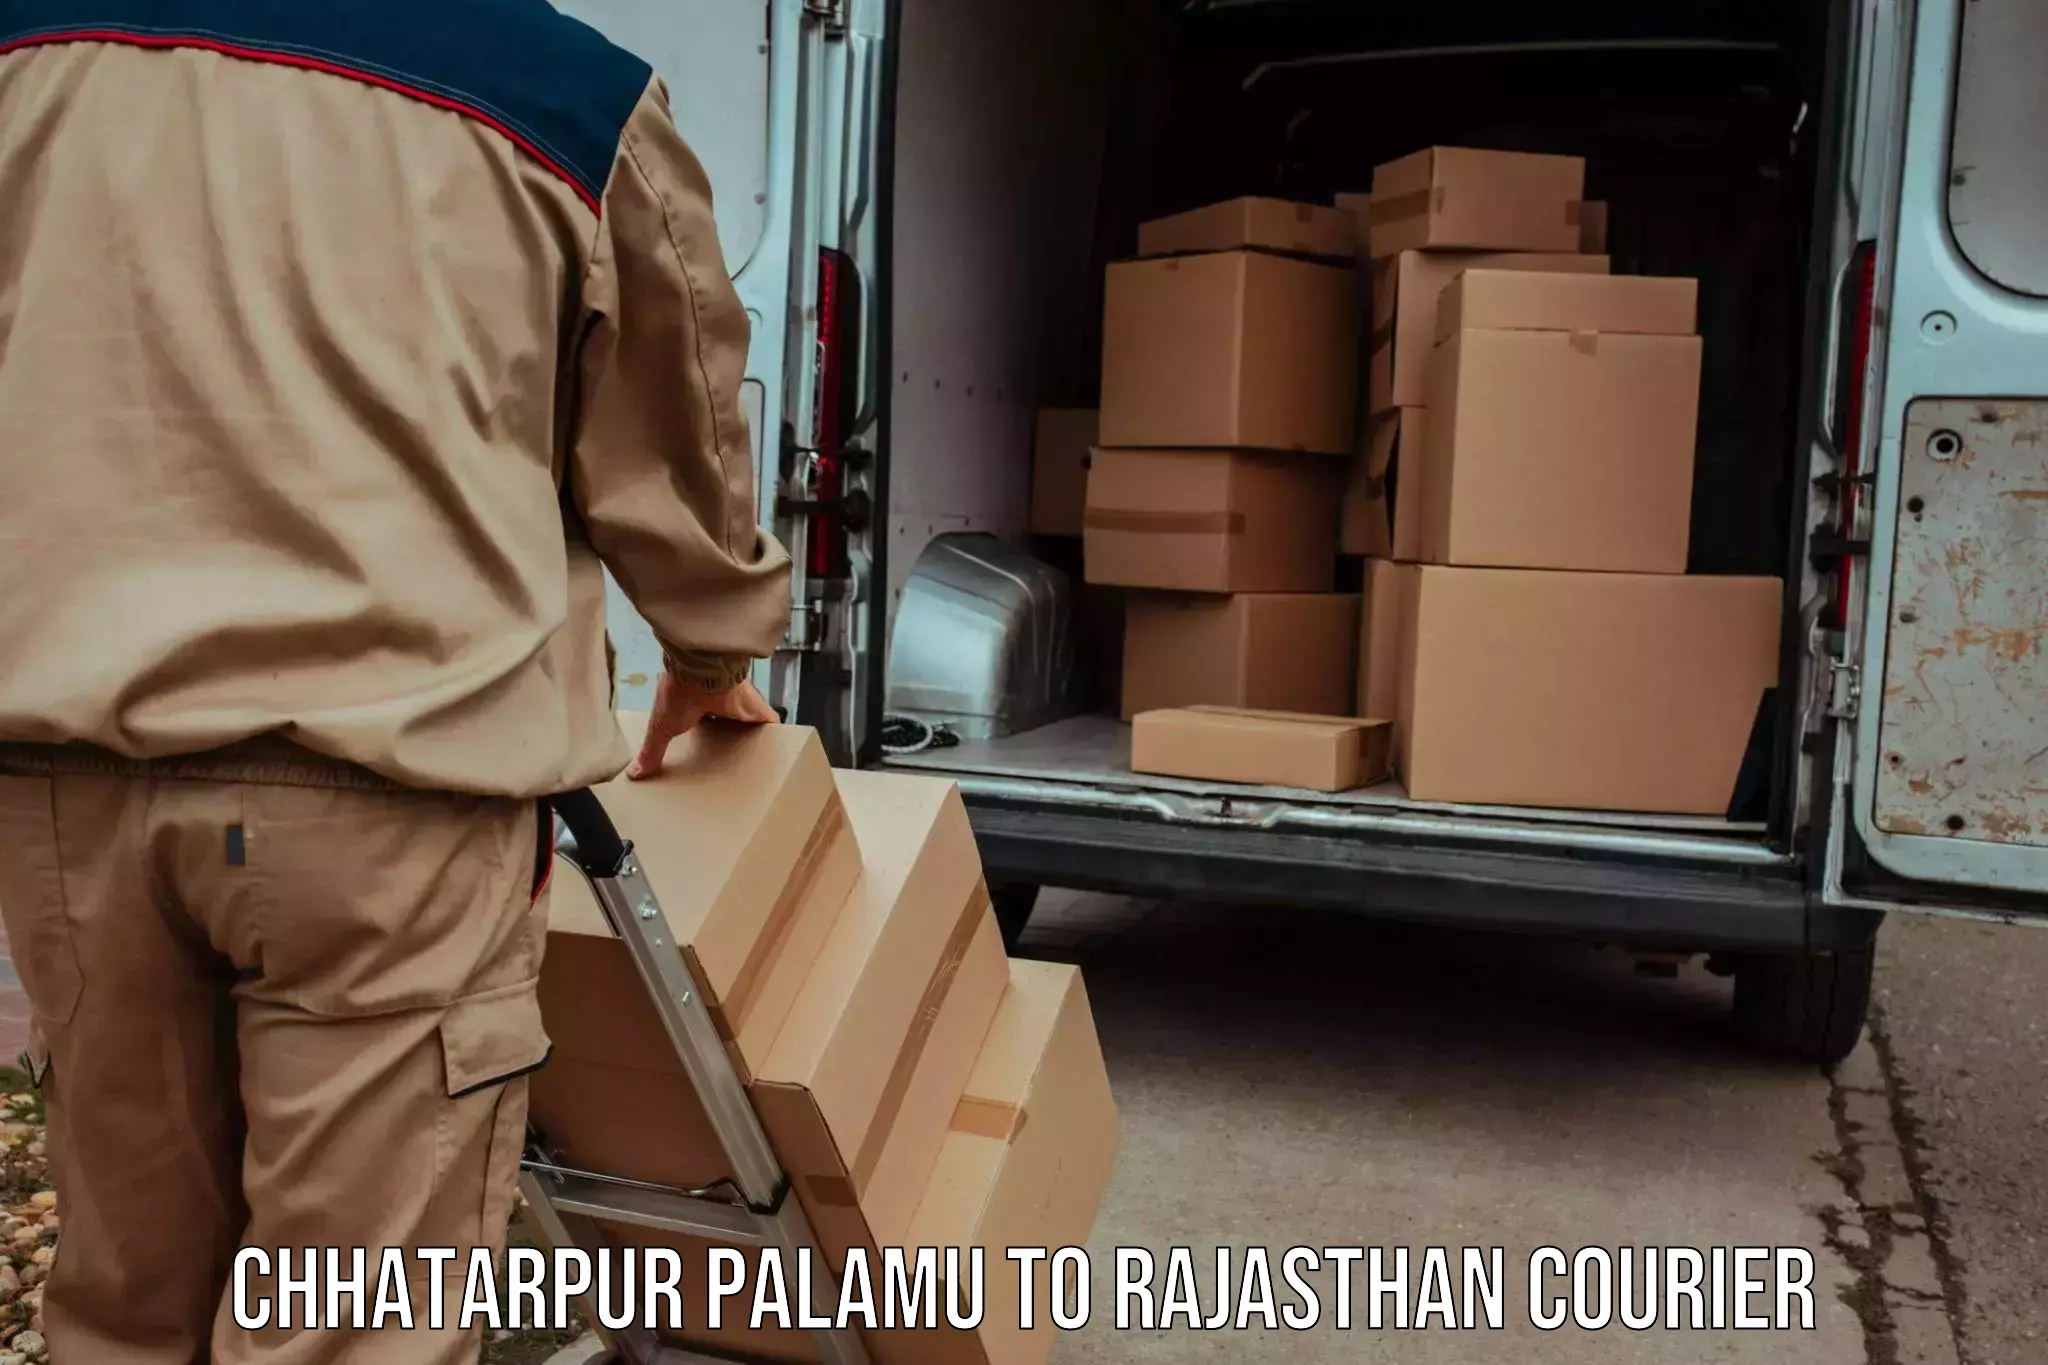 Courier service booking Chhatarpur Palamu to Bhiwadi